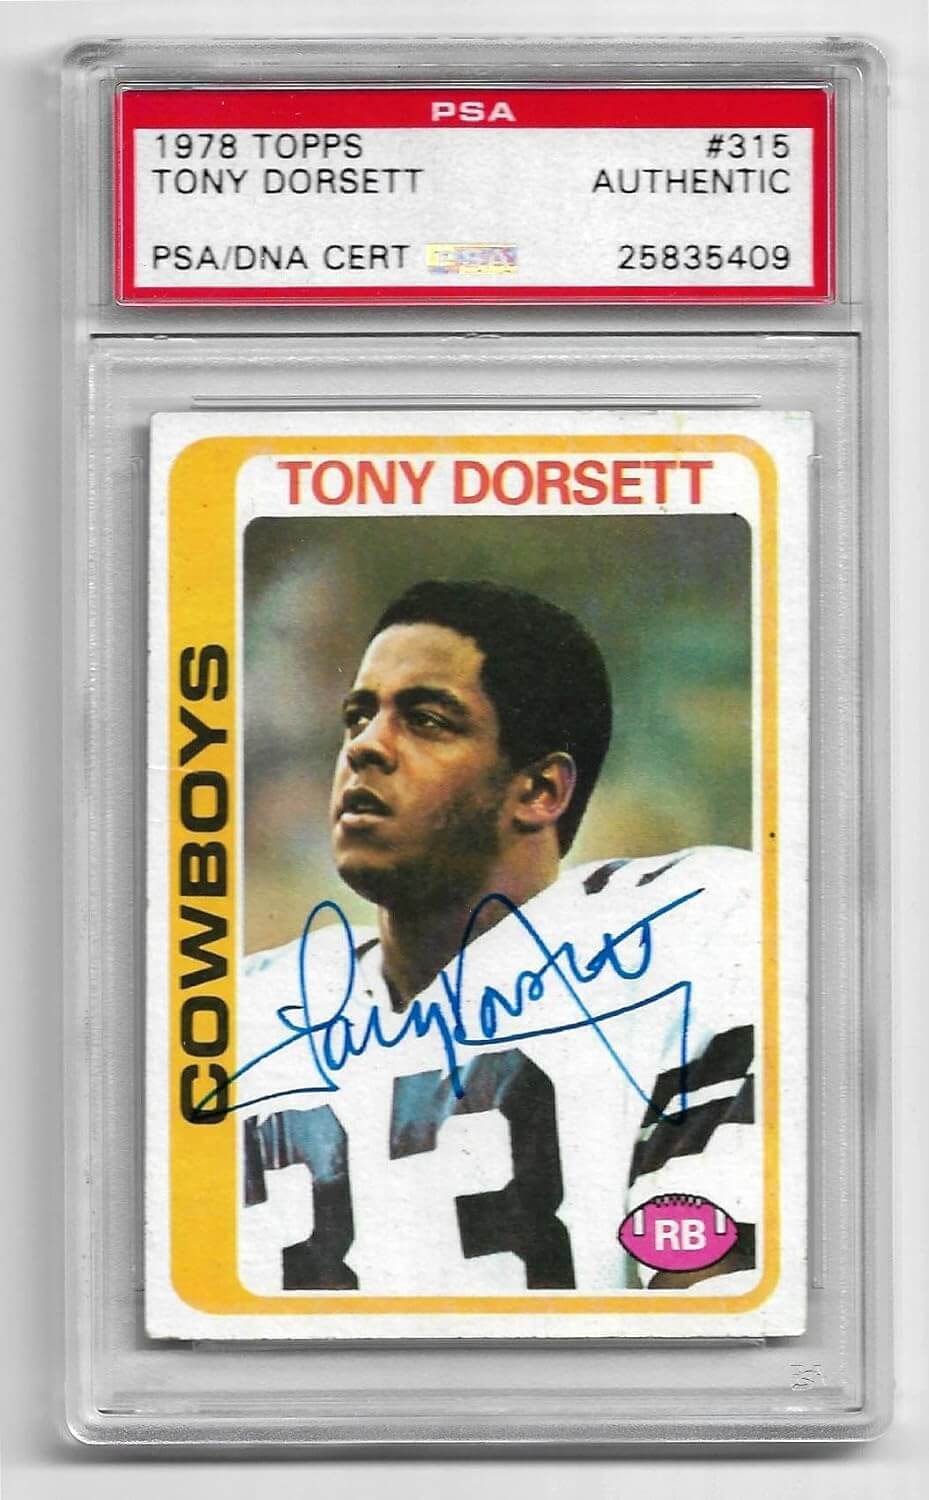 TONY DORSETT Signed Original 1978 Topps Dallas Cowboys ROOKIE Card #315 Autograph PSA/DNA